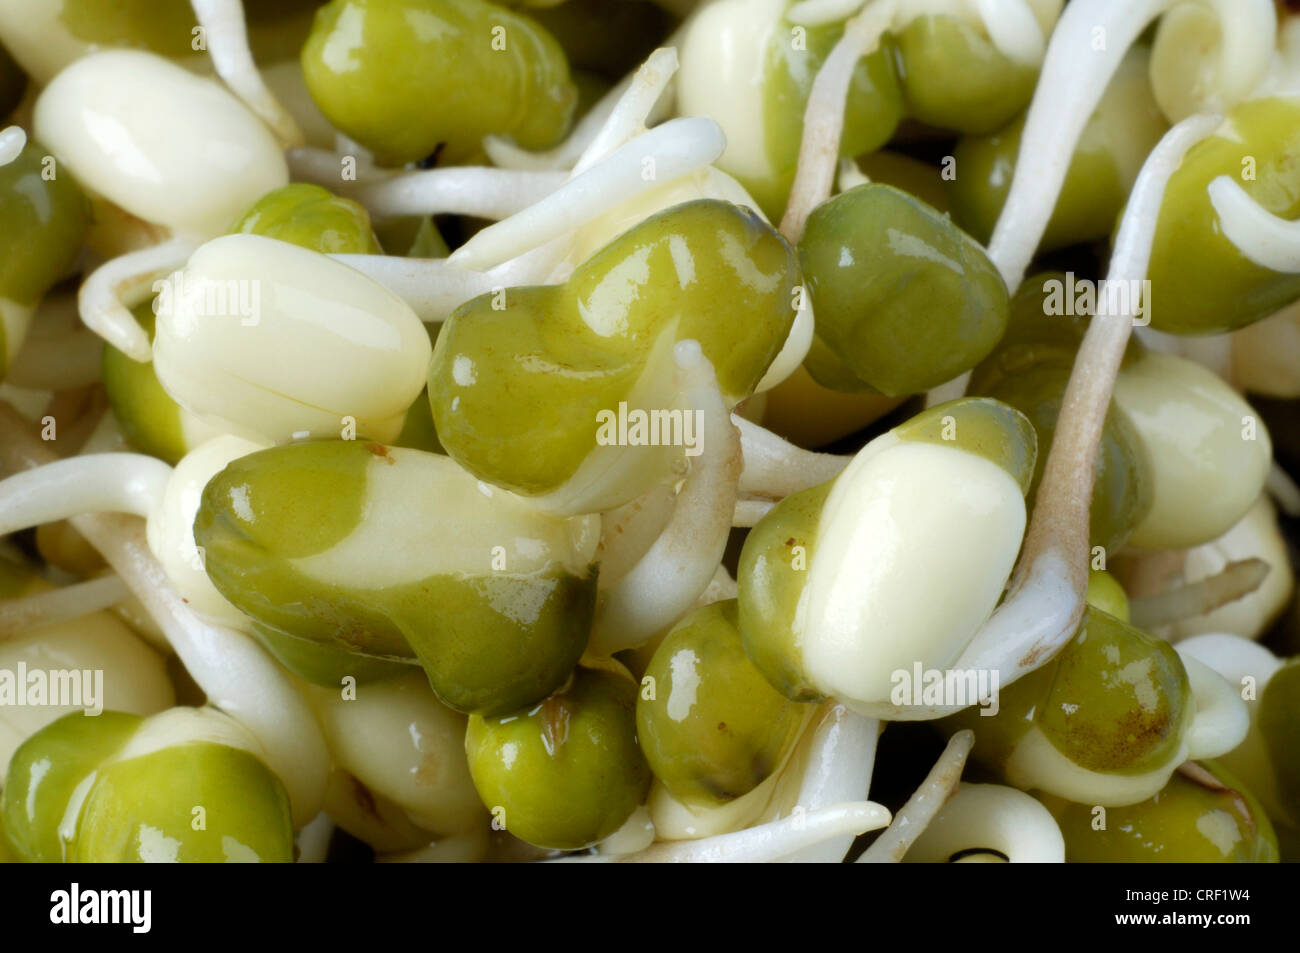 Mung Bean, Urdi Black Bean, Green Gram (Vigna mungo, Vigna radiata, Phaseolus mungo, Phaseolus radiatus), sprouts Stock Photo